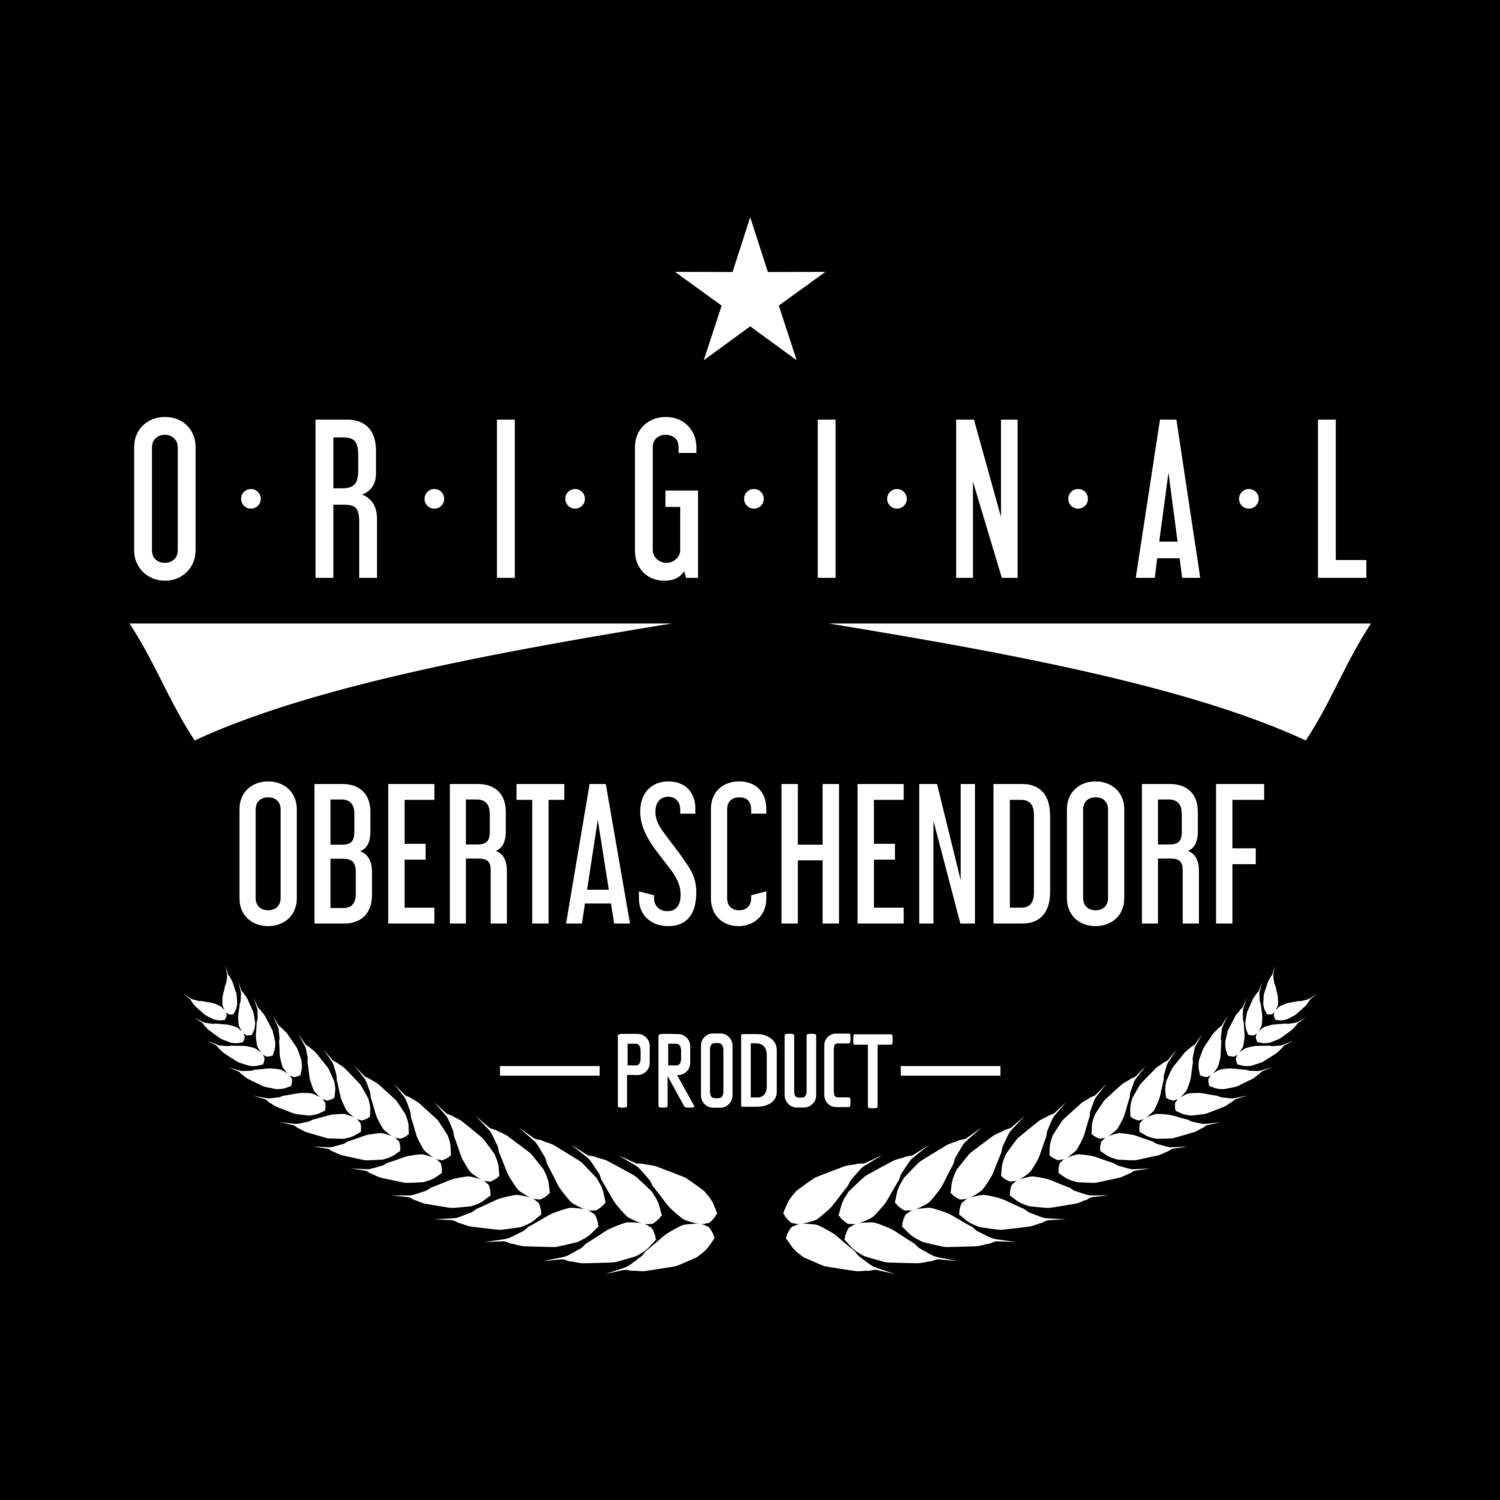 Obertaschendorf T-Shirt »Original Product«